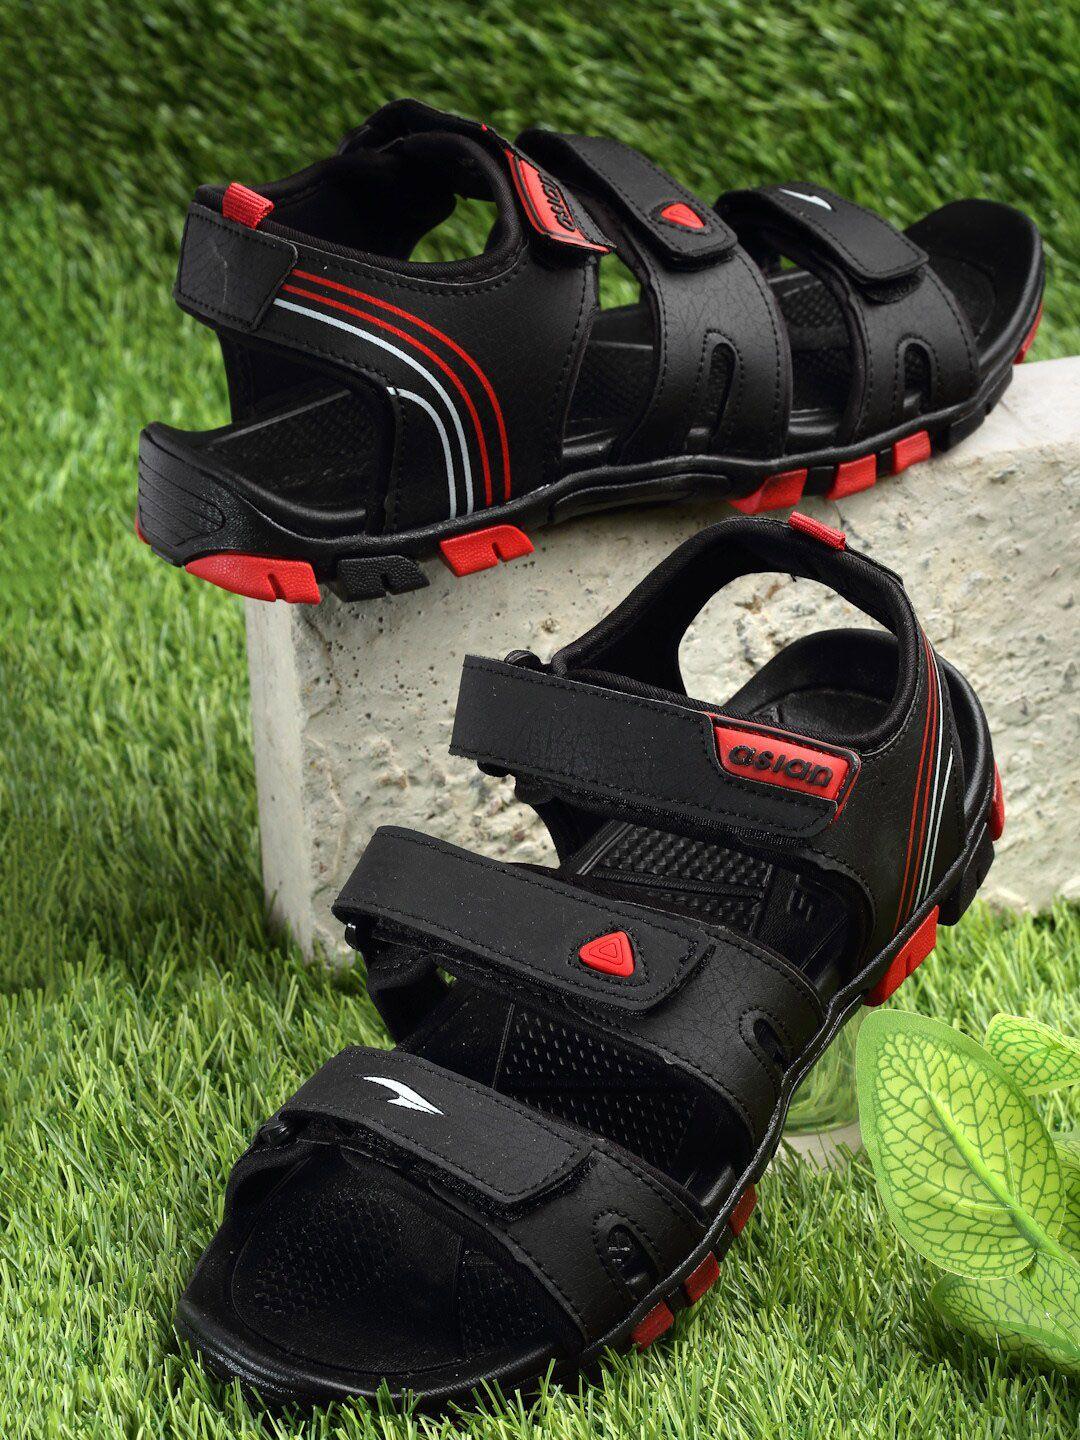 asian-men-vintage-08-sports-sandals